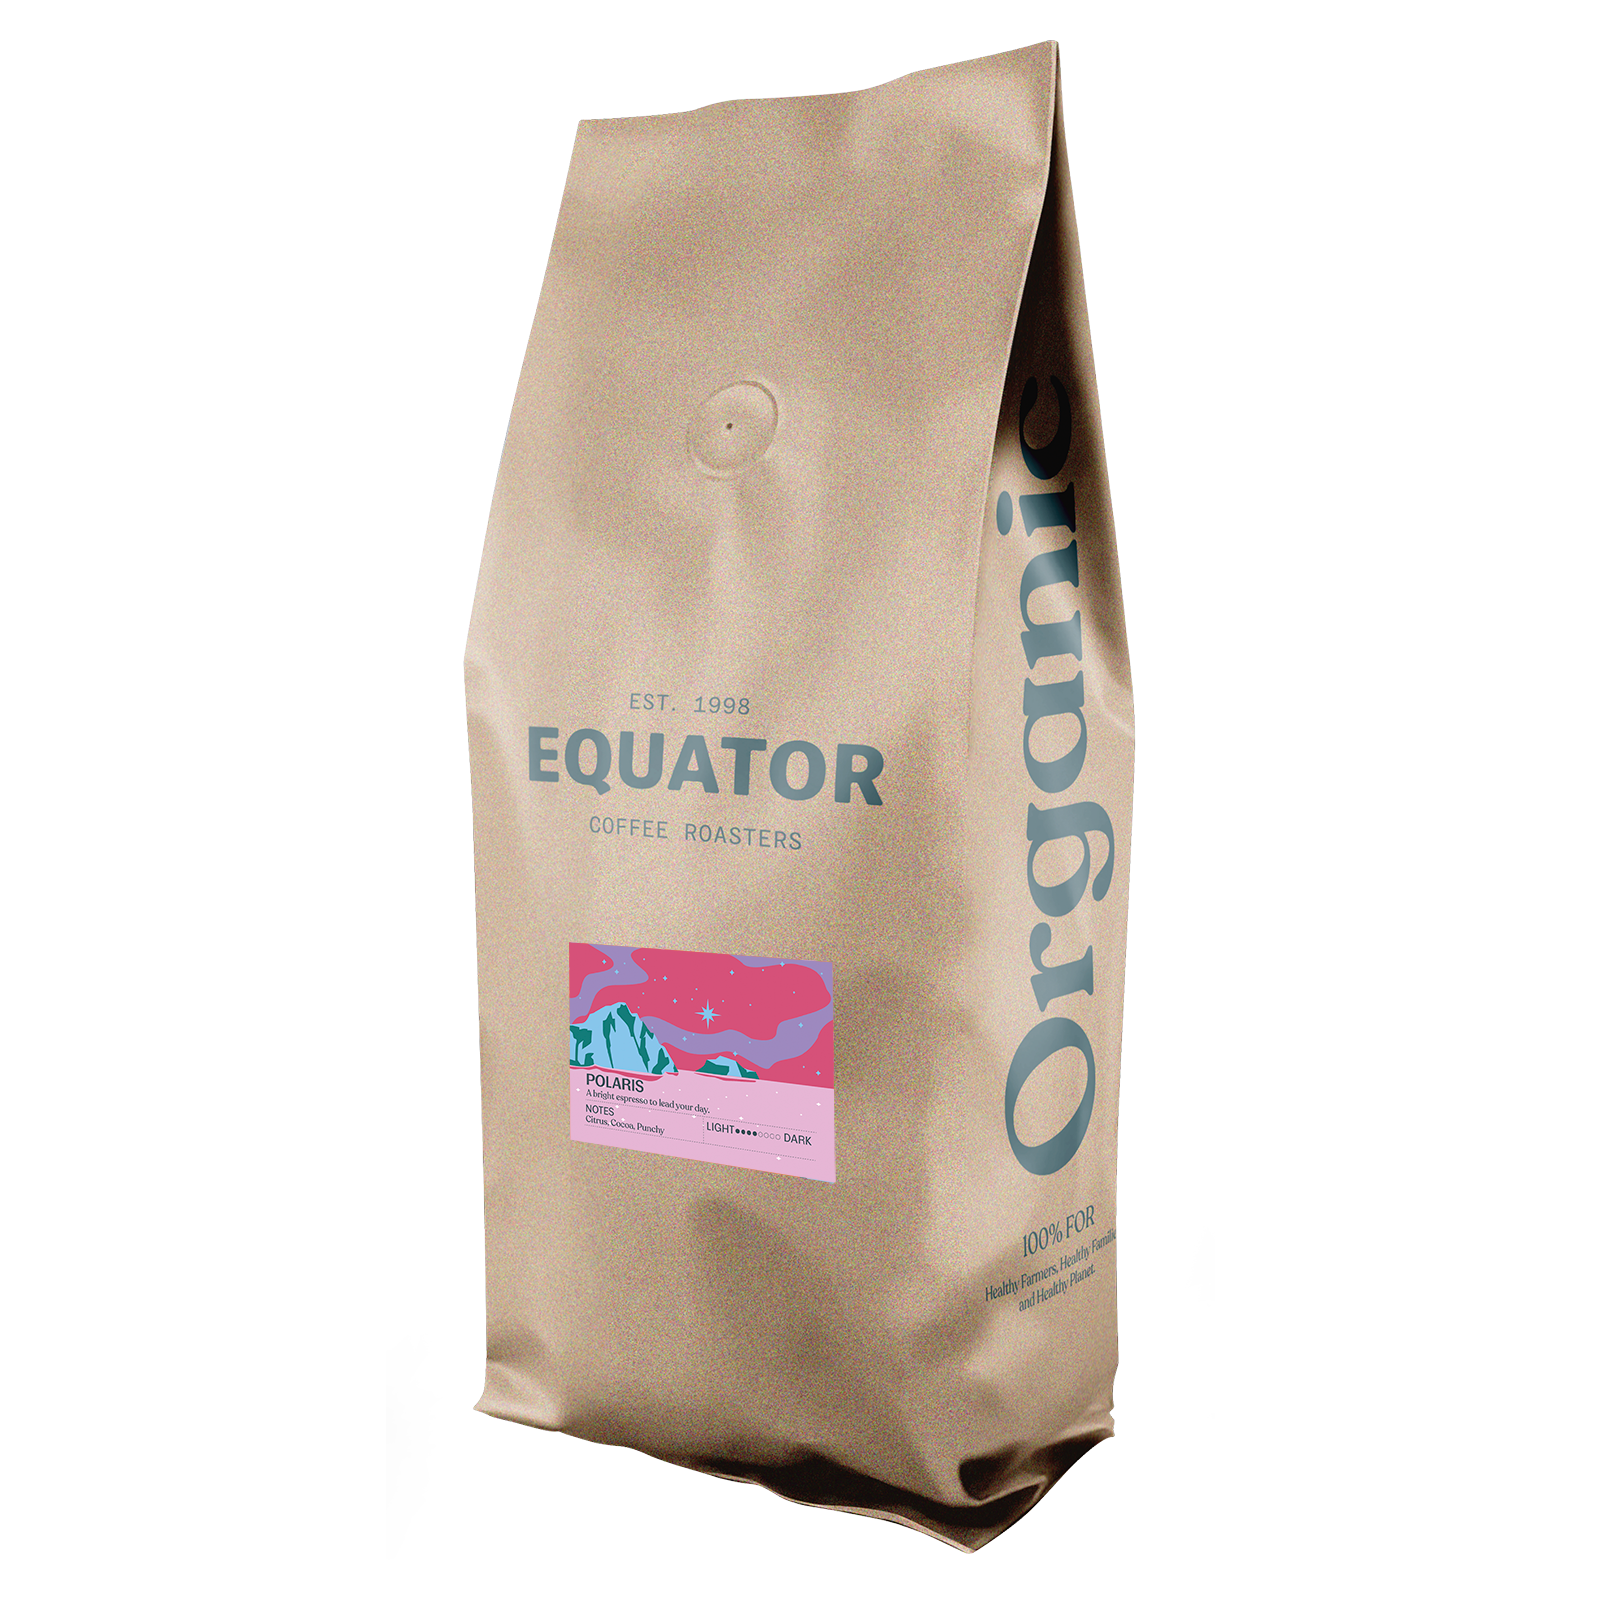 Equator Coffee Roaster's Polaris Espresso beans in a 5lb or 2.27kg bag.